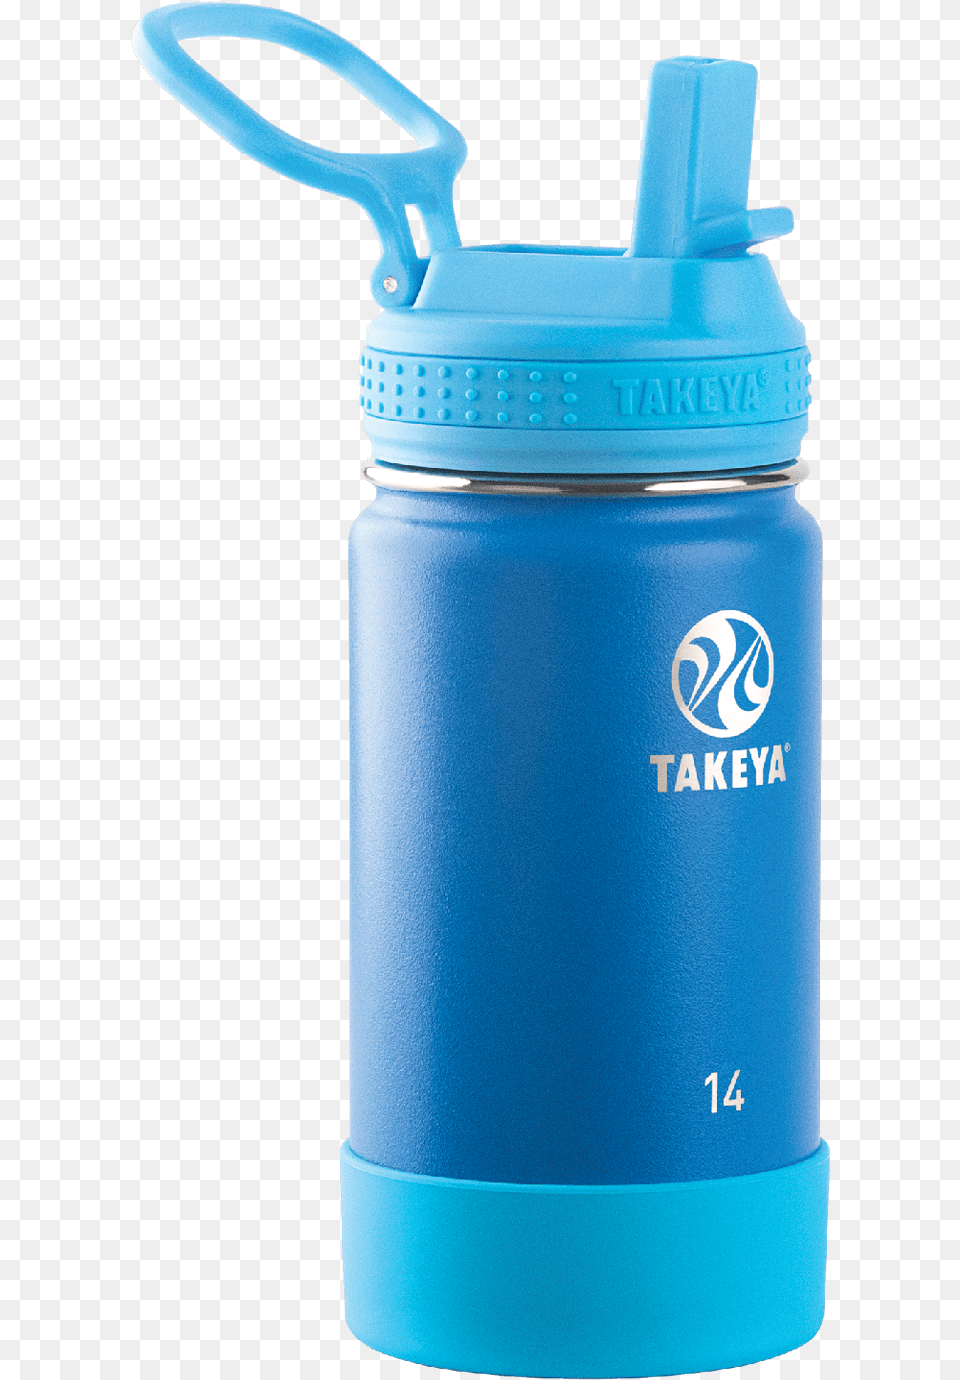 Takeya Actives Kids Stainless Steel Water Bottle Wstraw Takeya Water Bottle Pink, Water Bottle, Smoke Pipe, Tape, Shaker Png Image